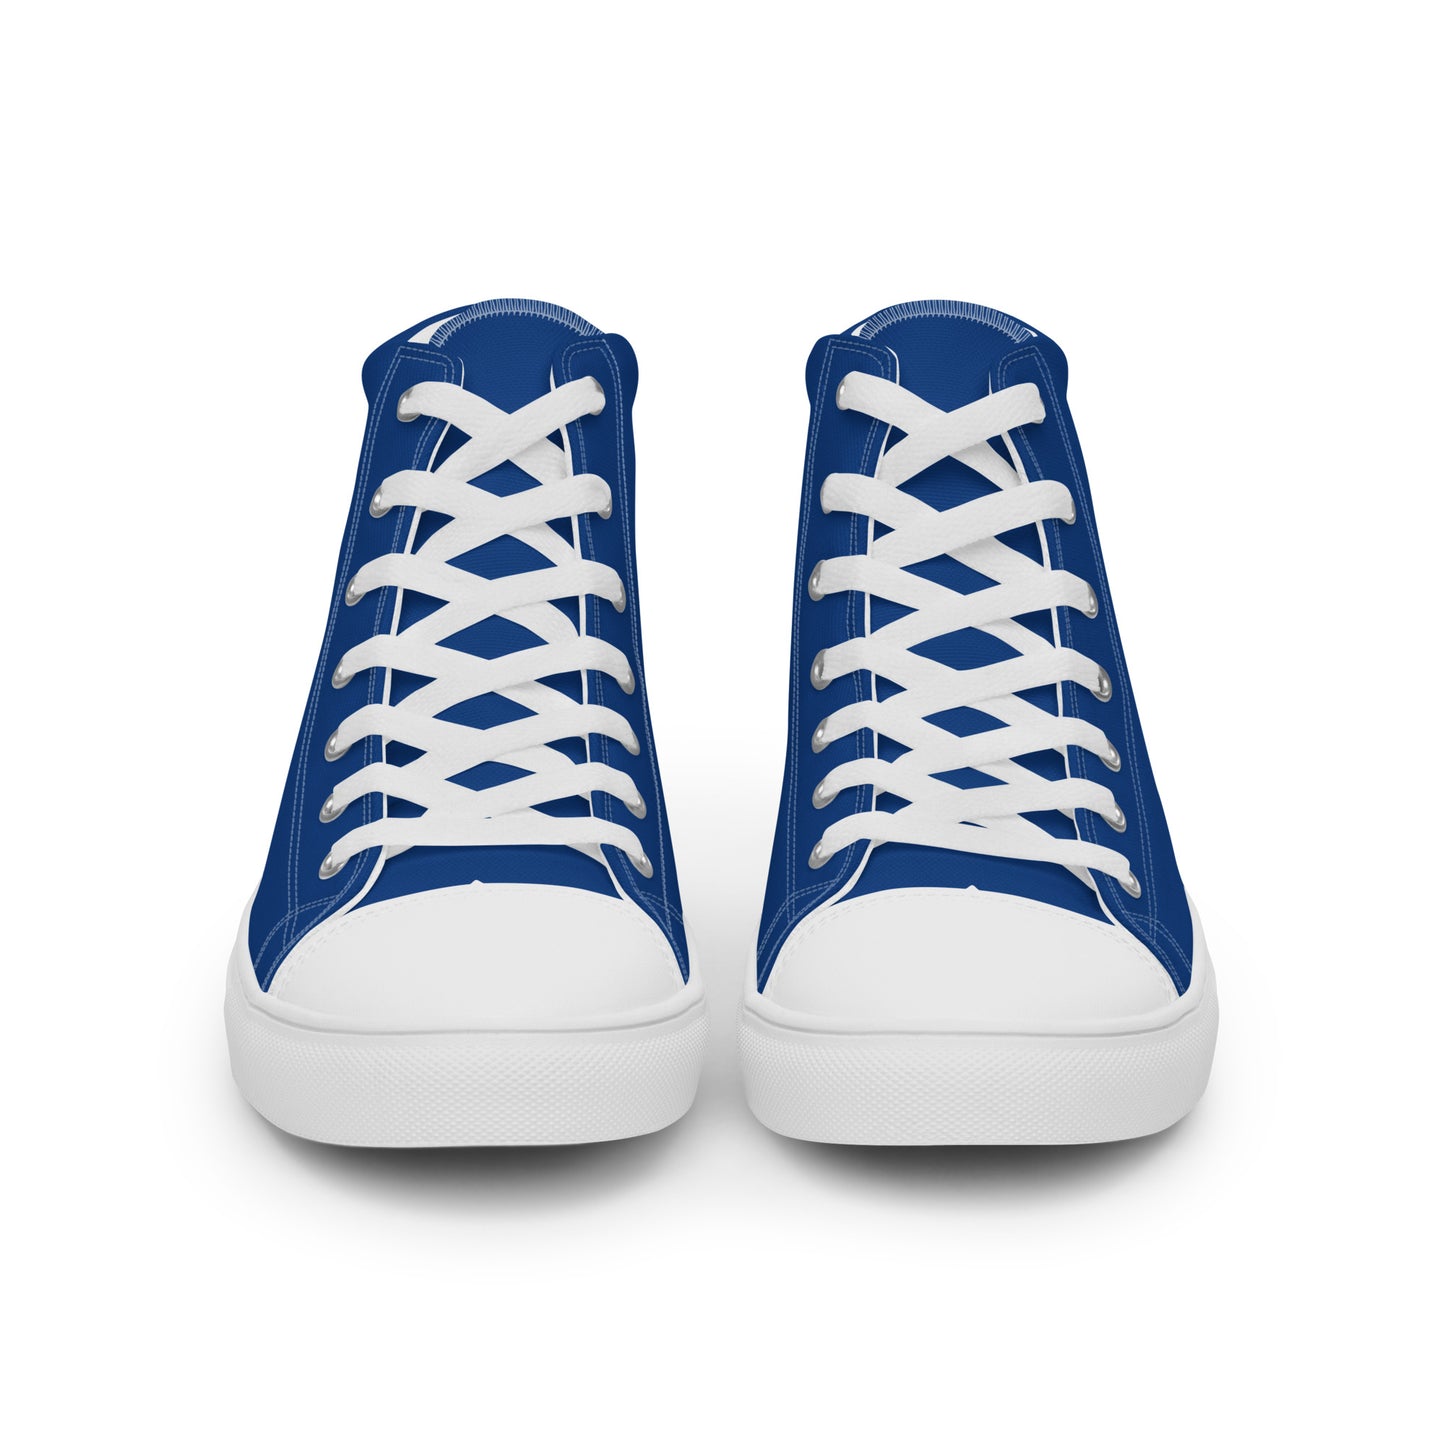 Honduras - Men - Blue - High top shoes